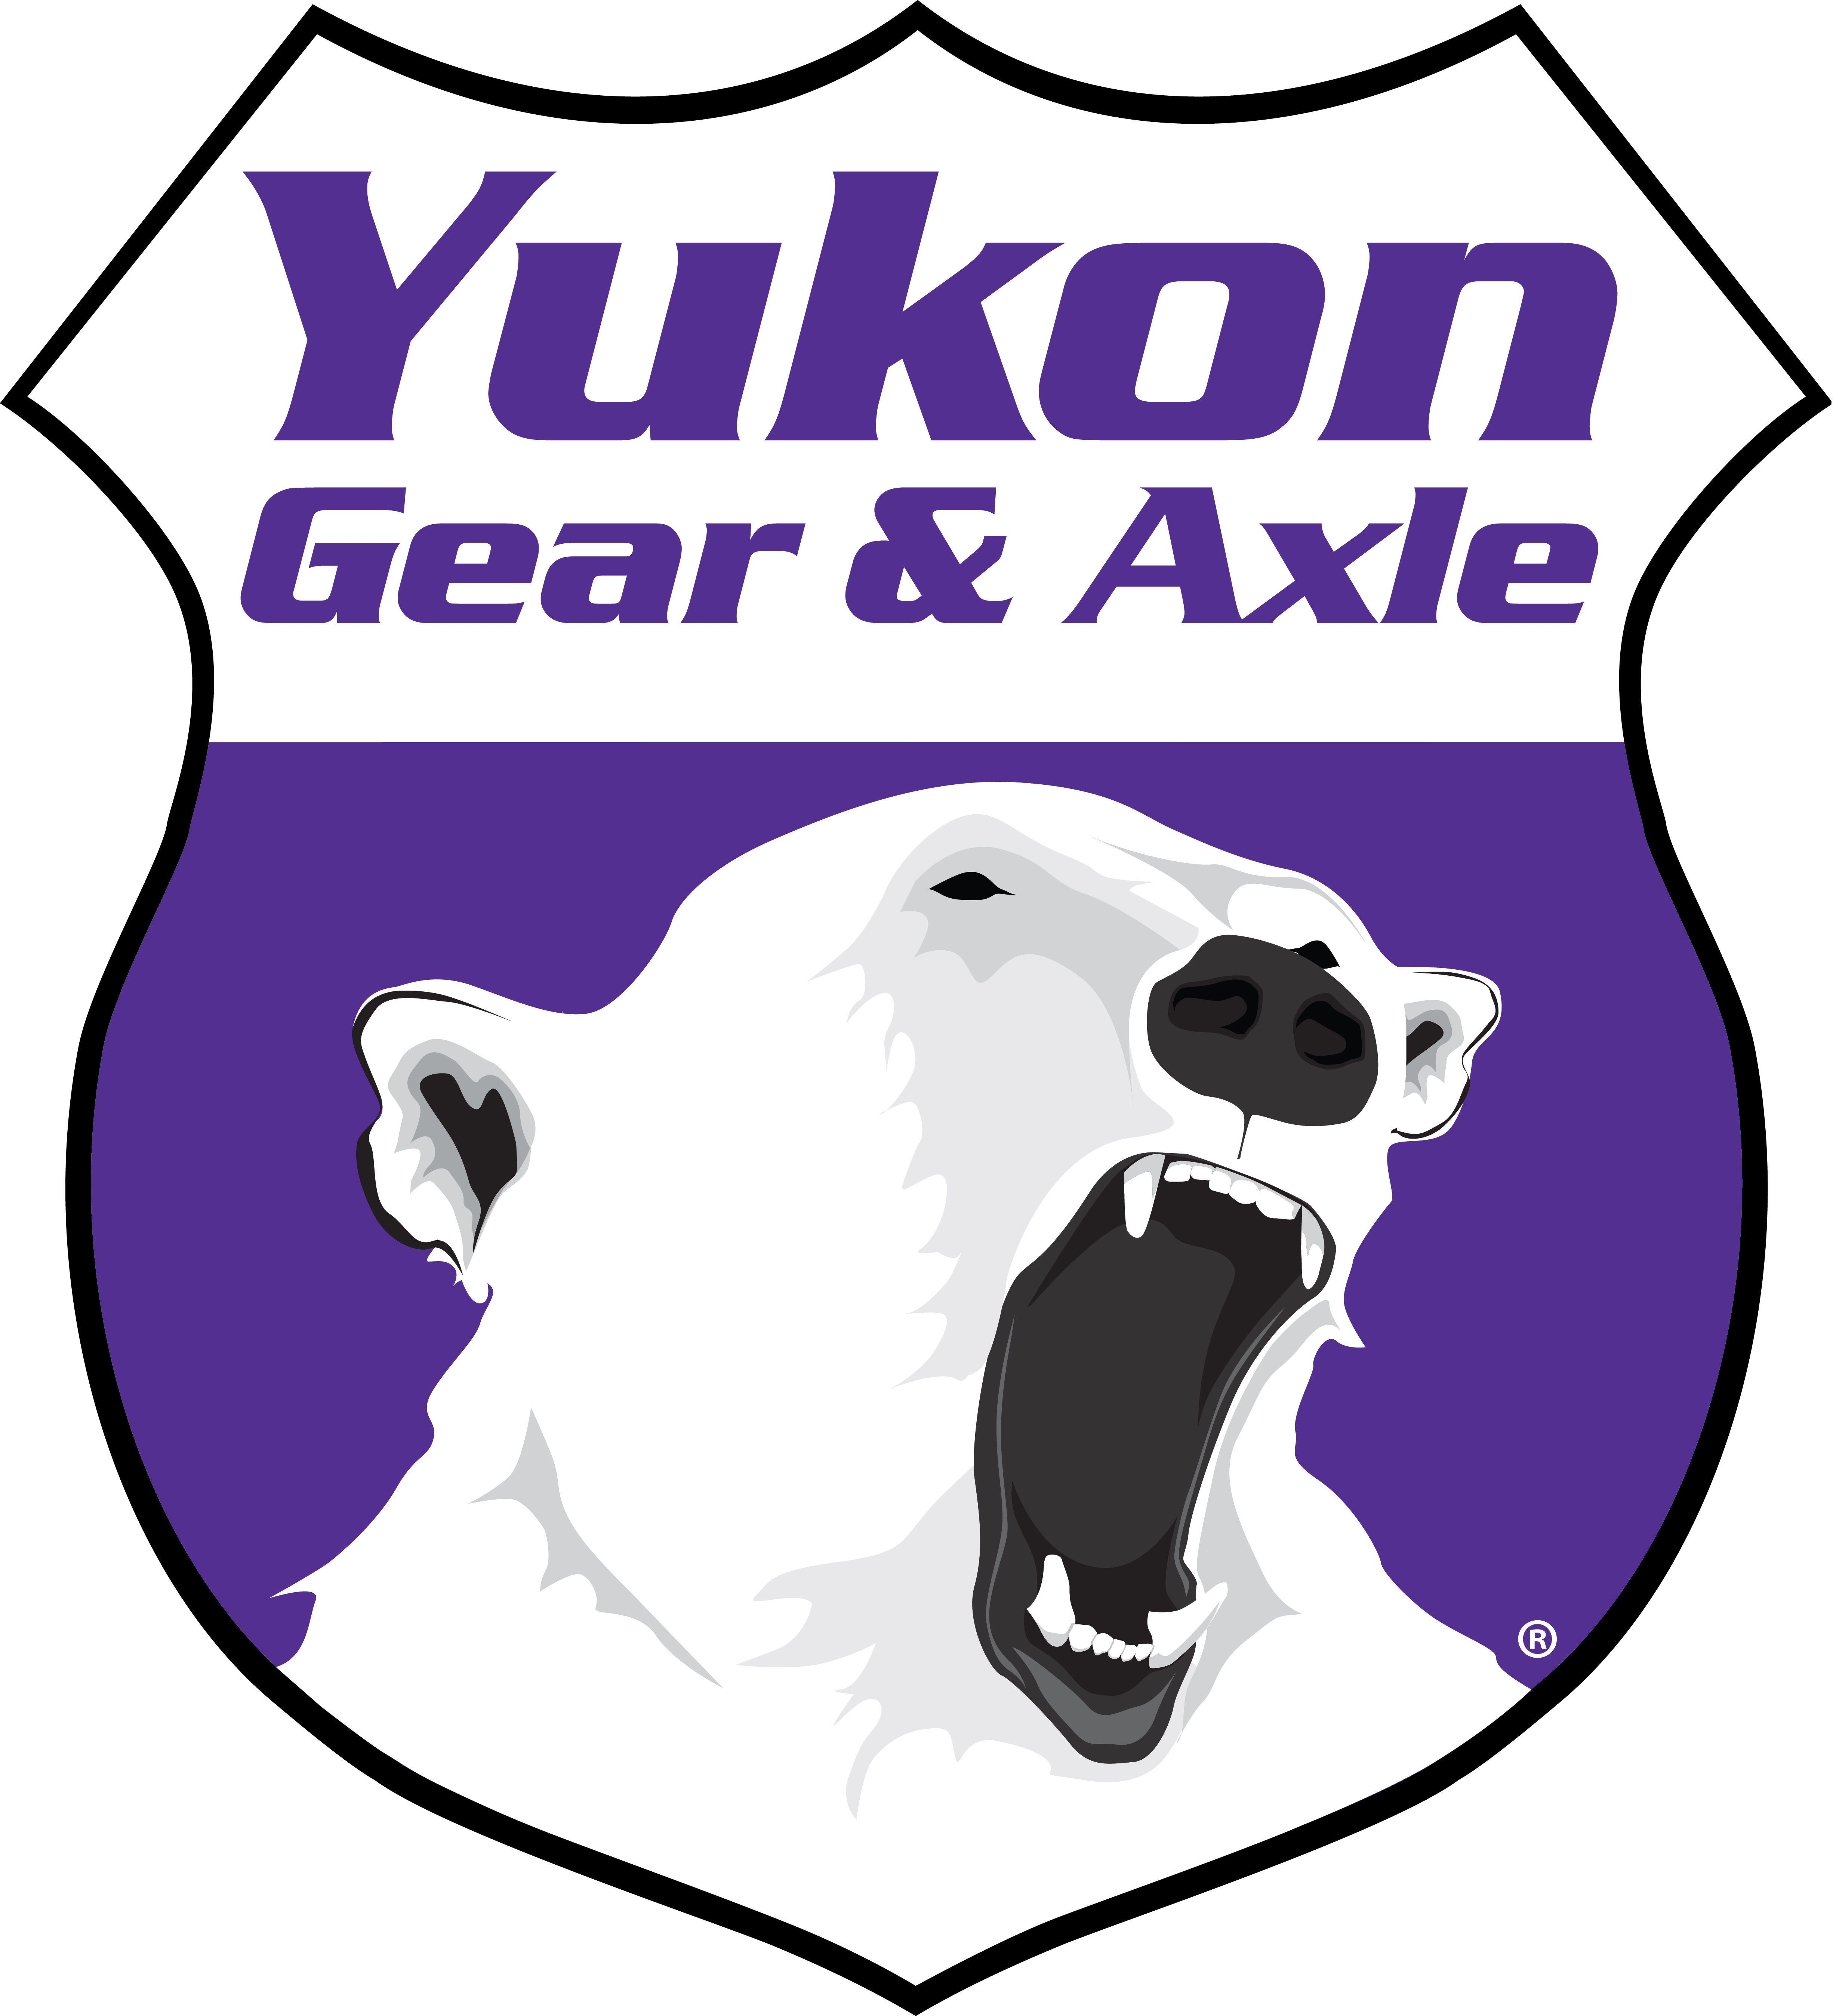 Yukon performance front driveshaft, 2018+ Wrangler JL Sport, Heavy Duty 1310 